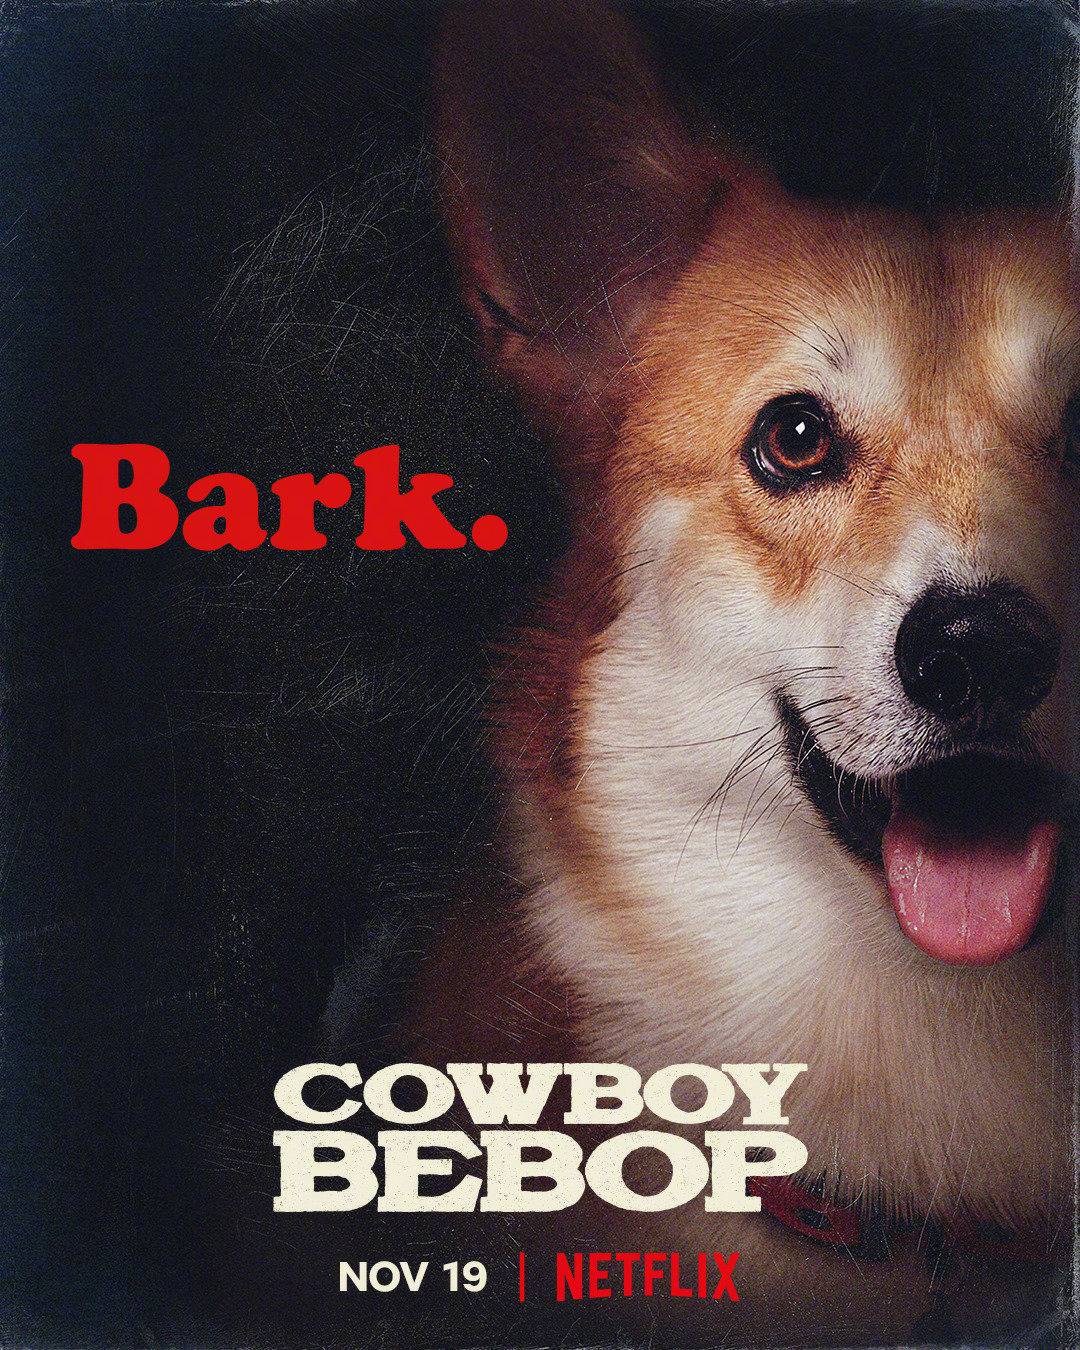 Extra Large TV Poster Image for Cowboy Bebop (#8 of 9)